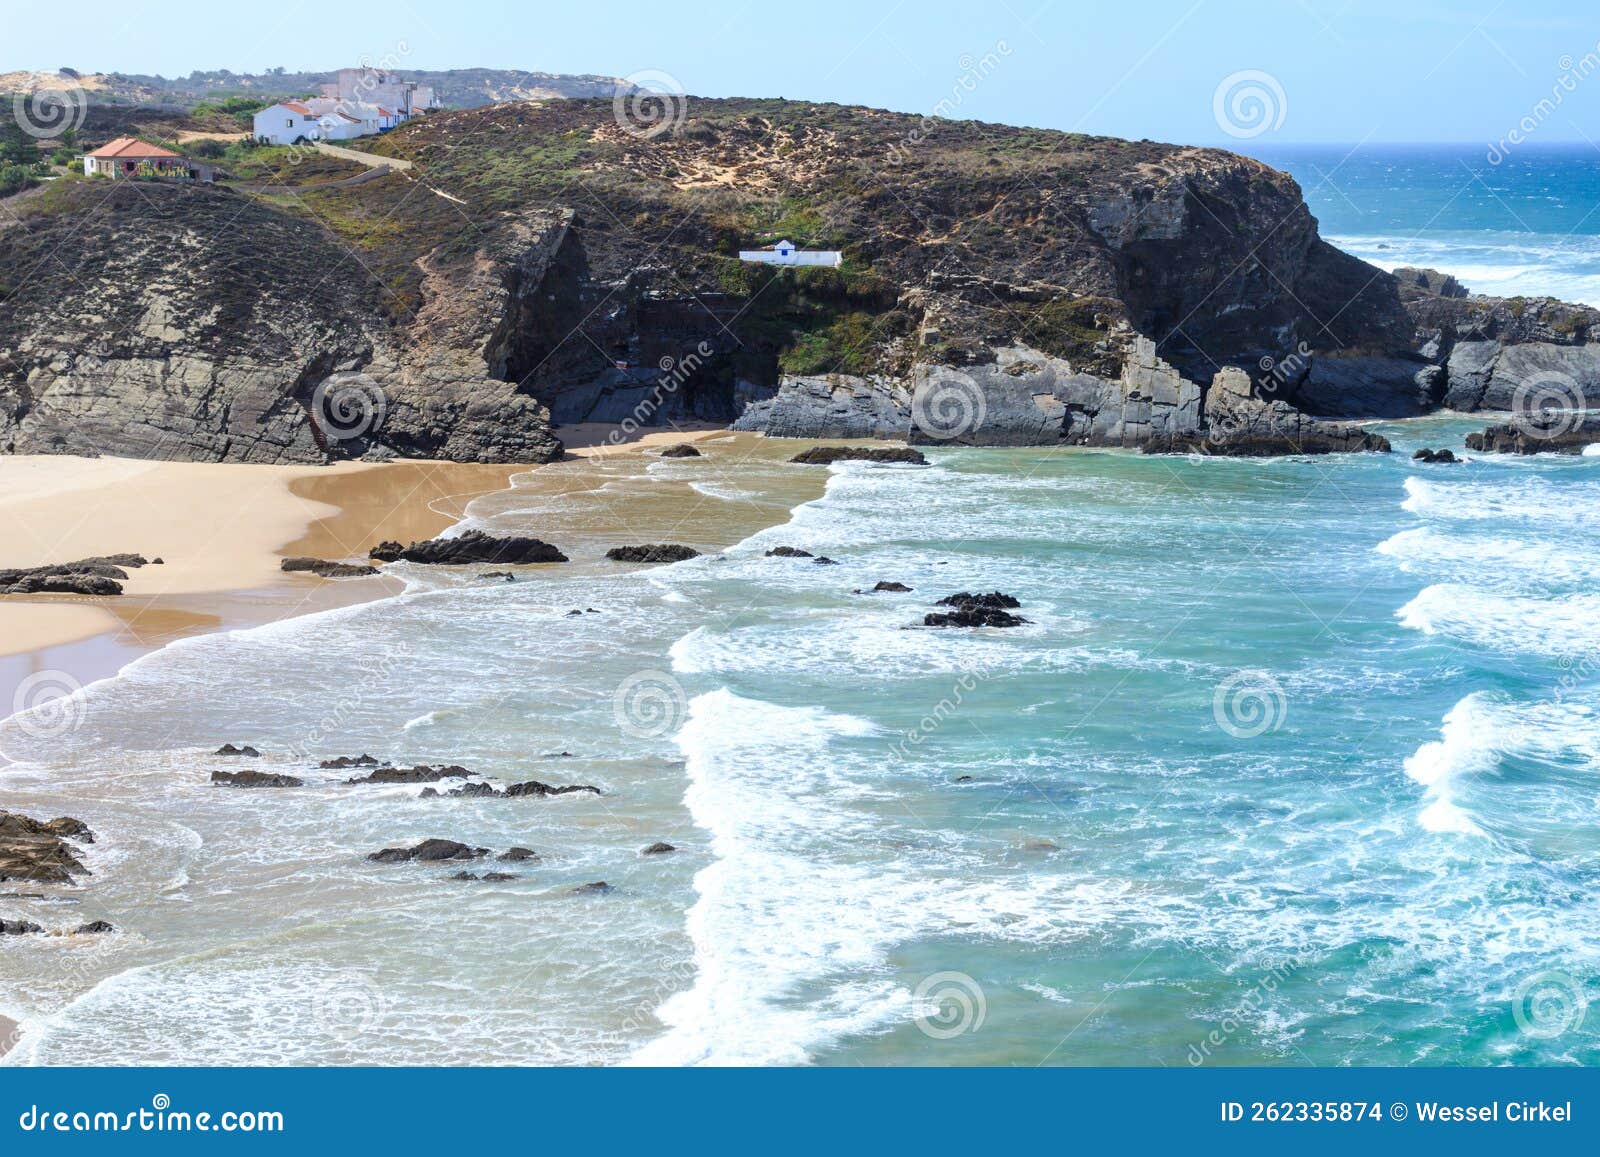 atlantic ocean coast, zambujeira do mar, portugal